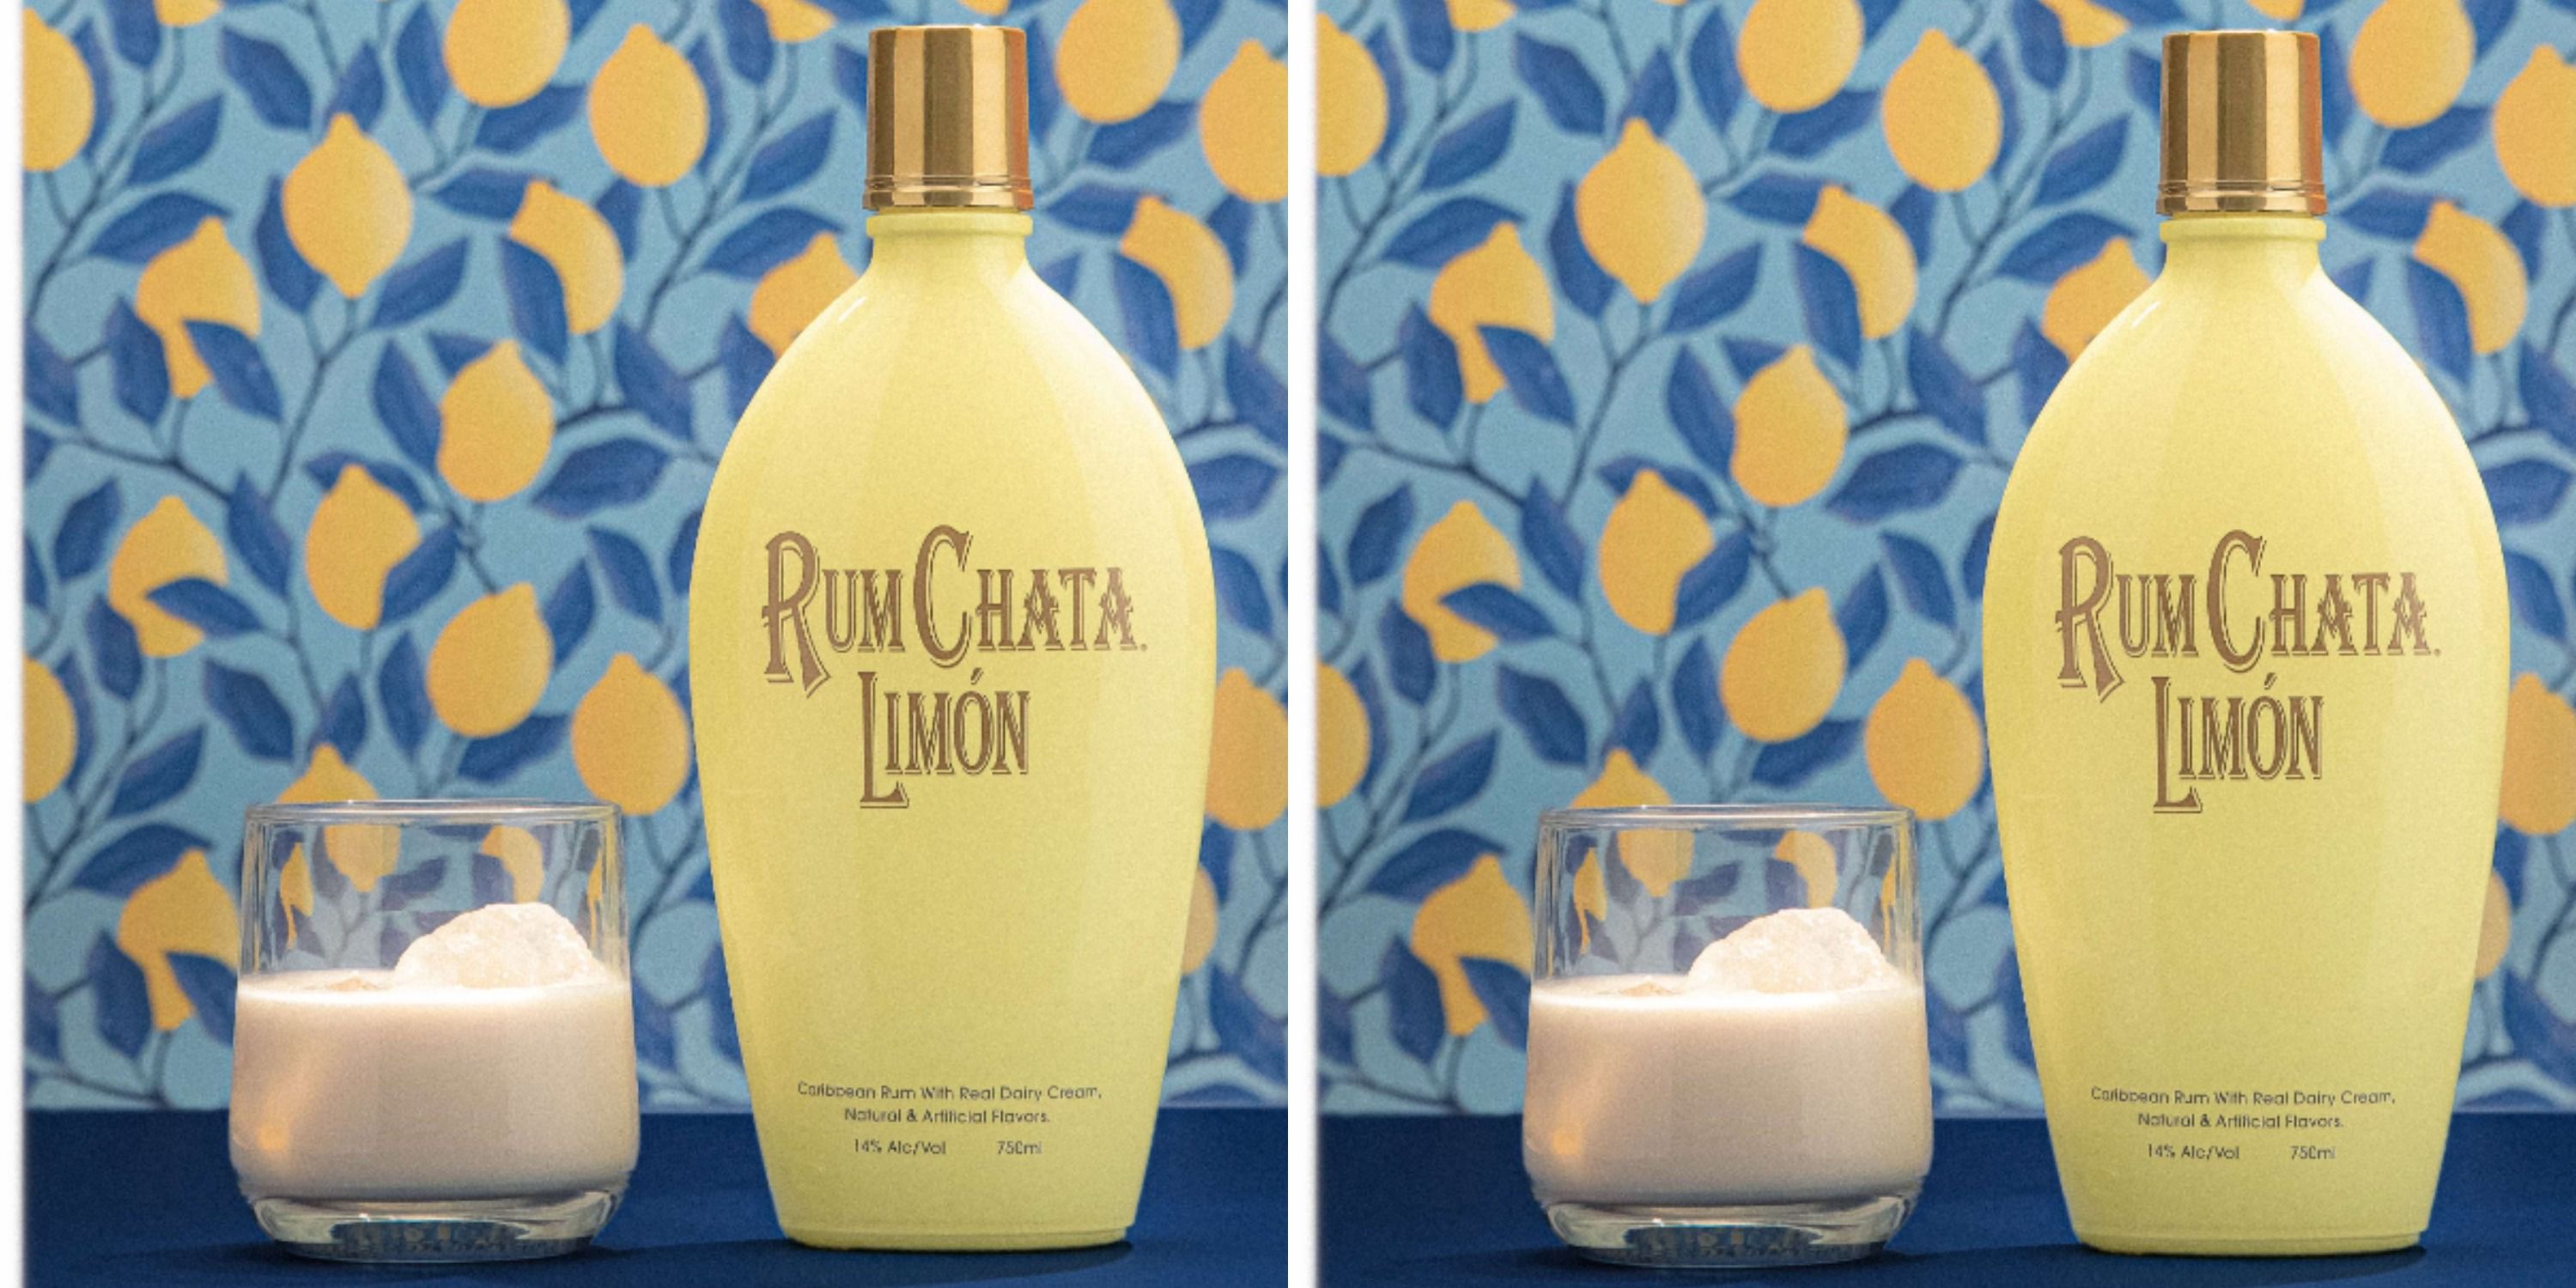 Rumchata Released A Lemon Flavor Called Rumchata Limon